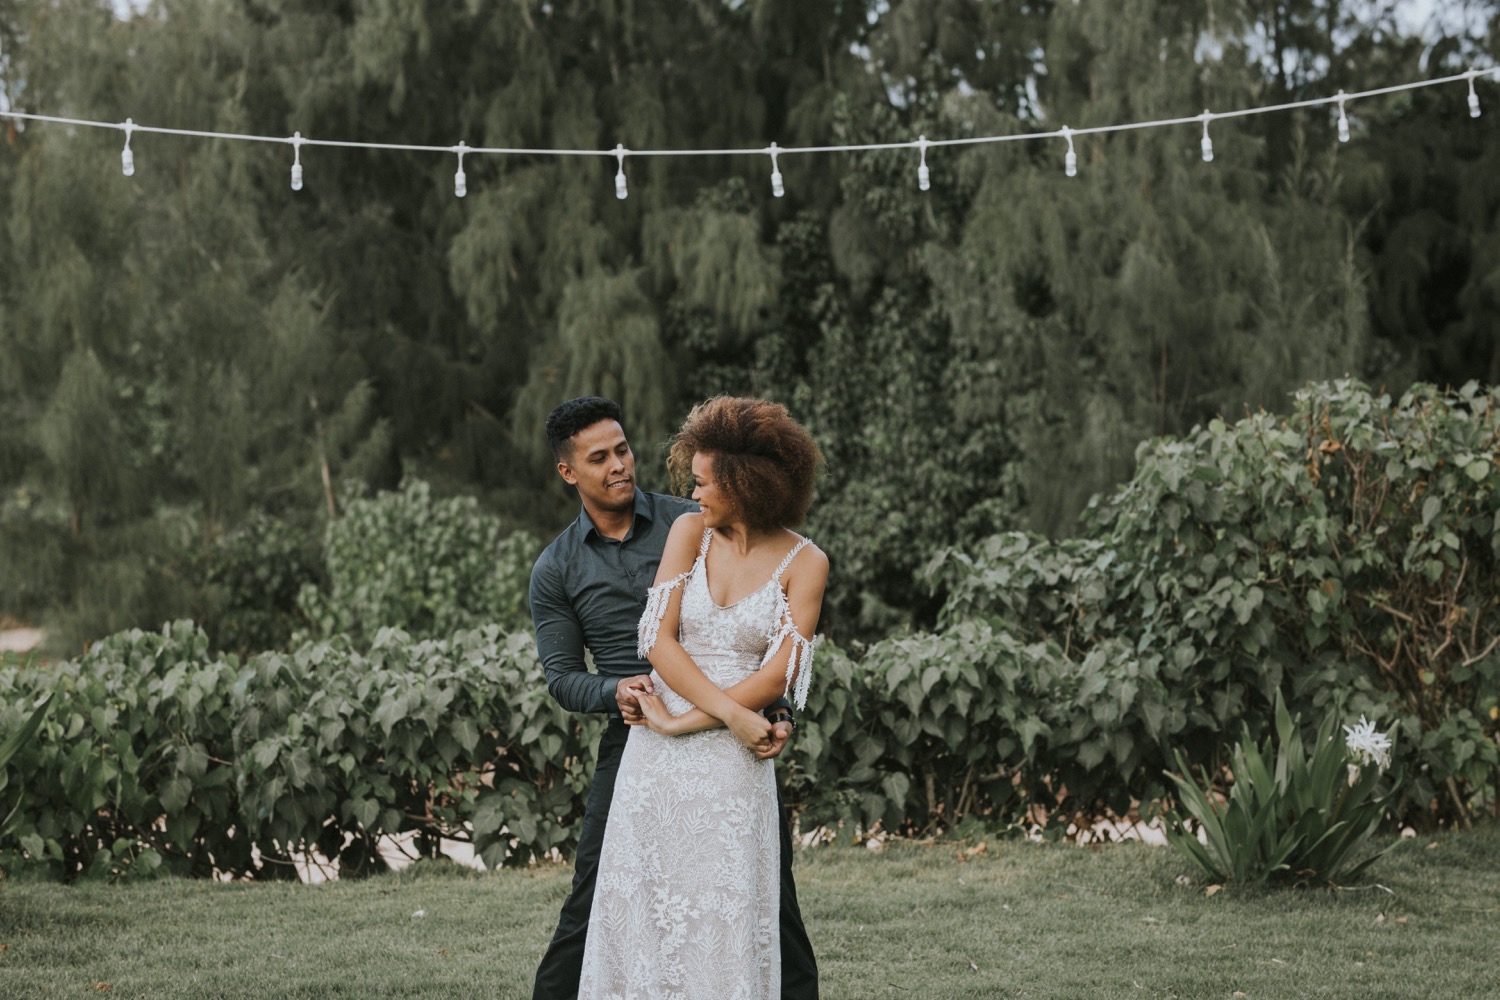 Loulu Palm Farm Estate, Loulu Palm Farm Estate Wedding, Oahu Wedding Photographer, Hawaii Wedding Photographer, Oahu Beach Wedding, Eco-friendly Wedding, Eco-Friendly Wedding Venue 